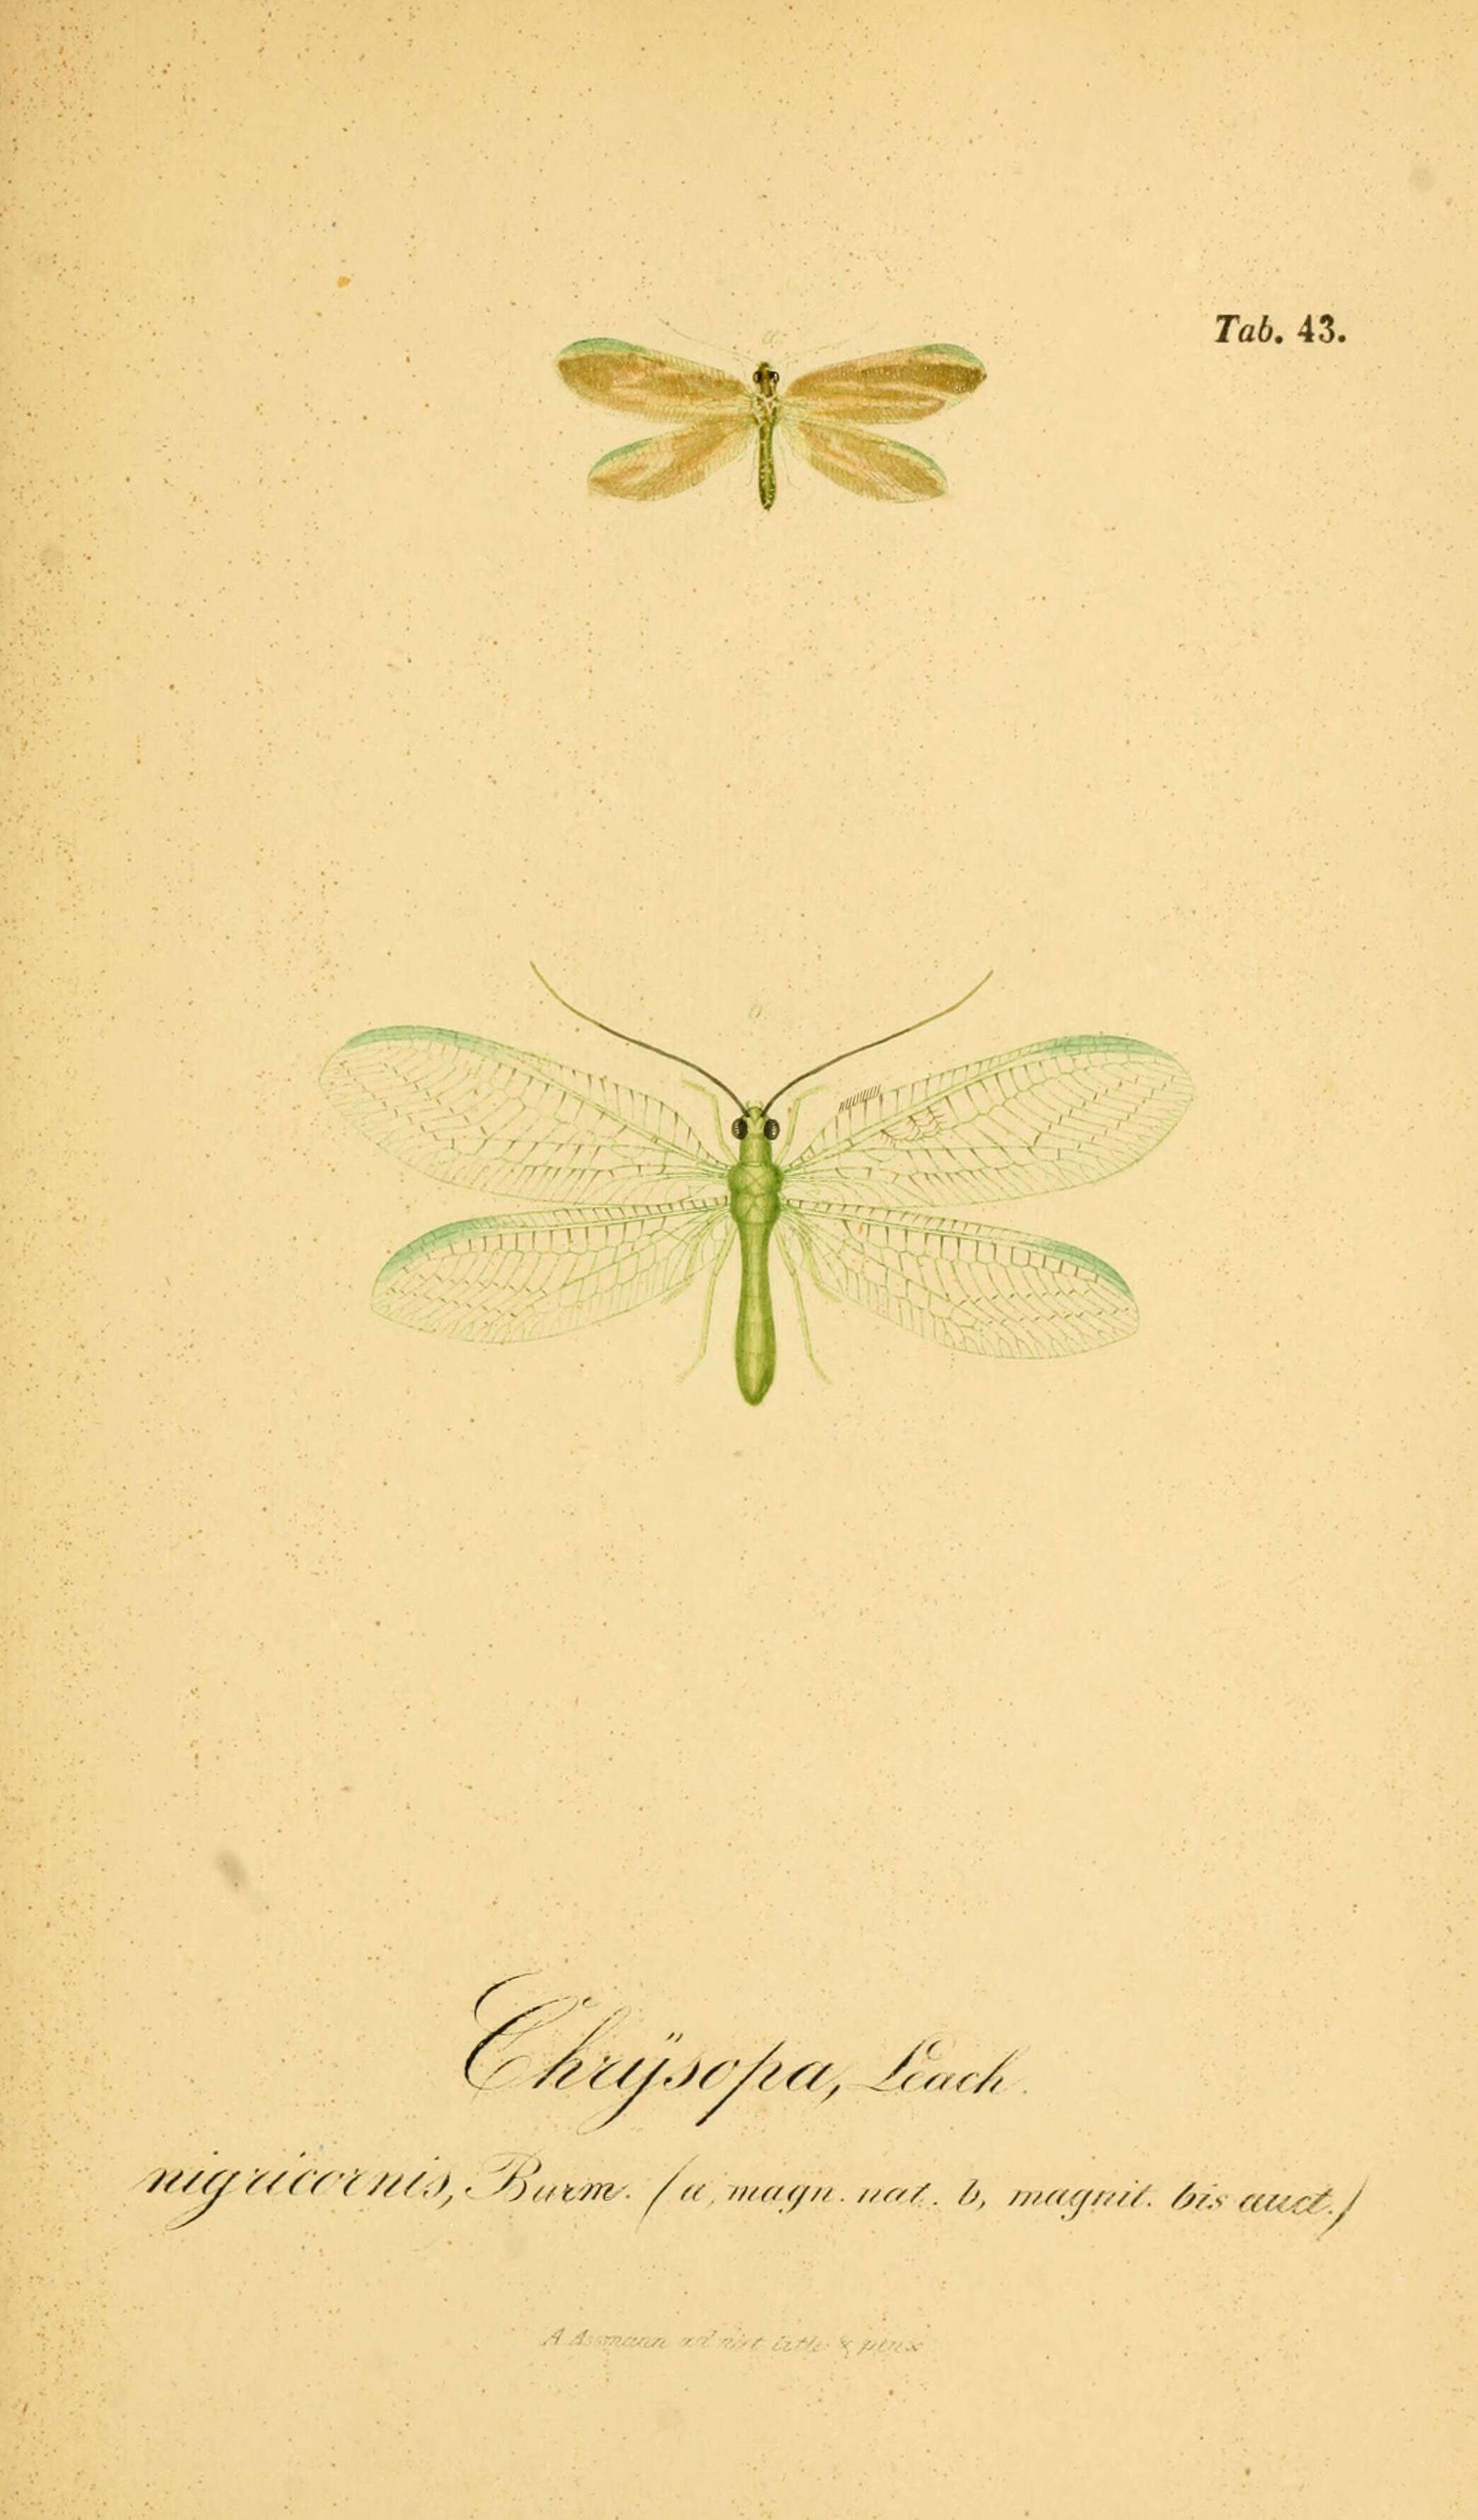 Image of Chrysopa nigricornis Burmeister 1839